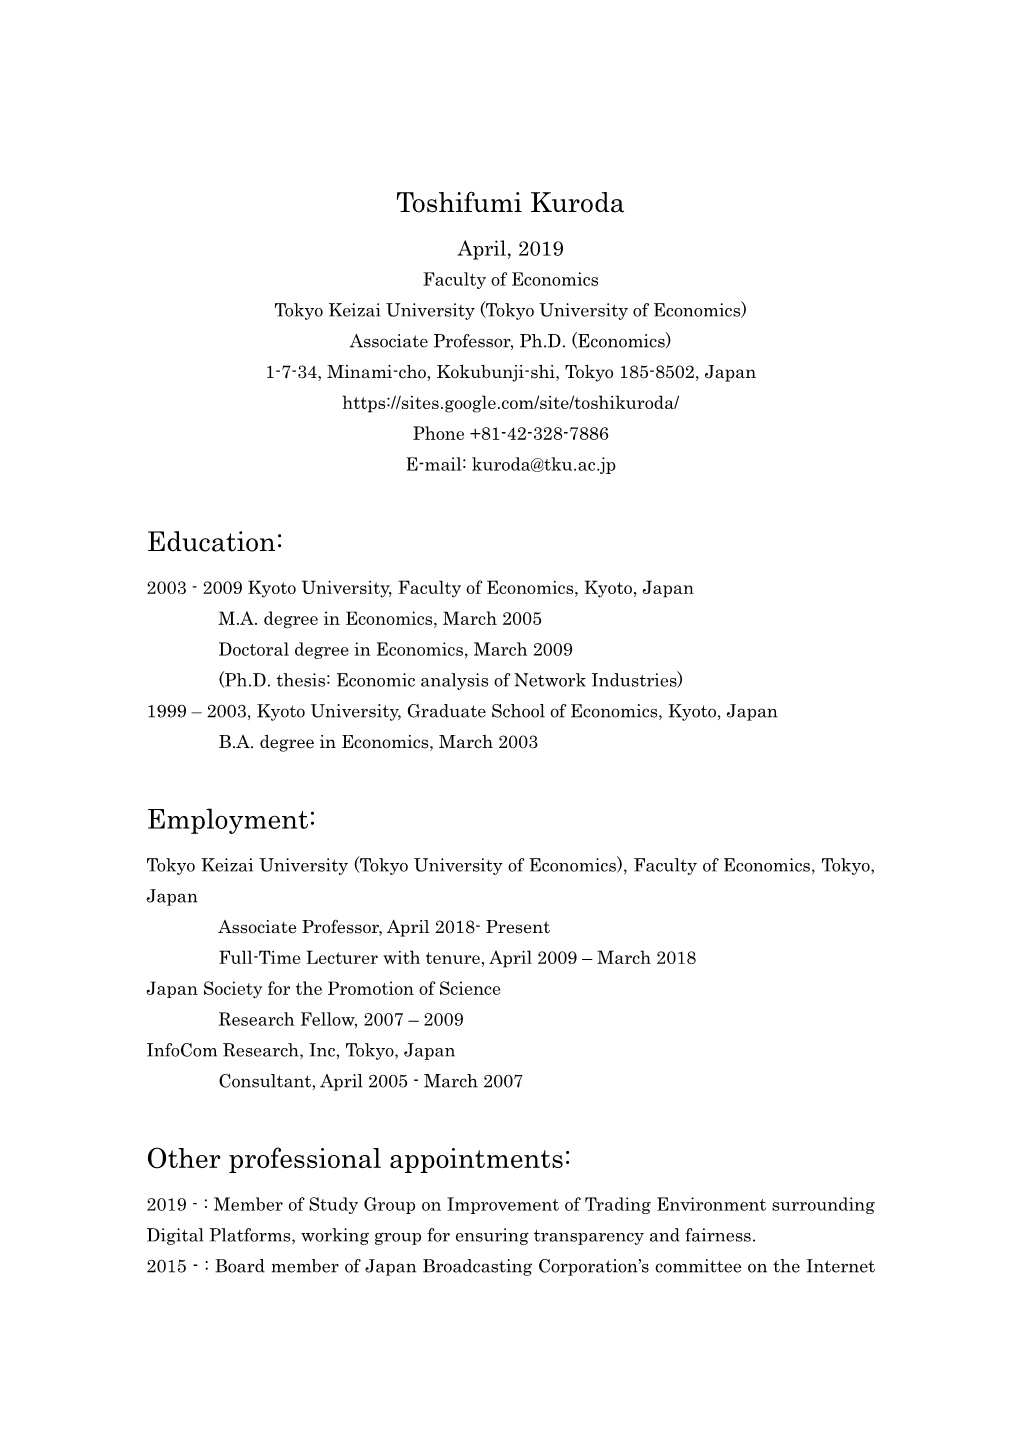 Toshifumi Kuroda Education: Employment: Other Professional